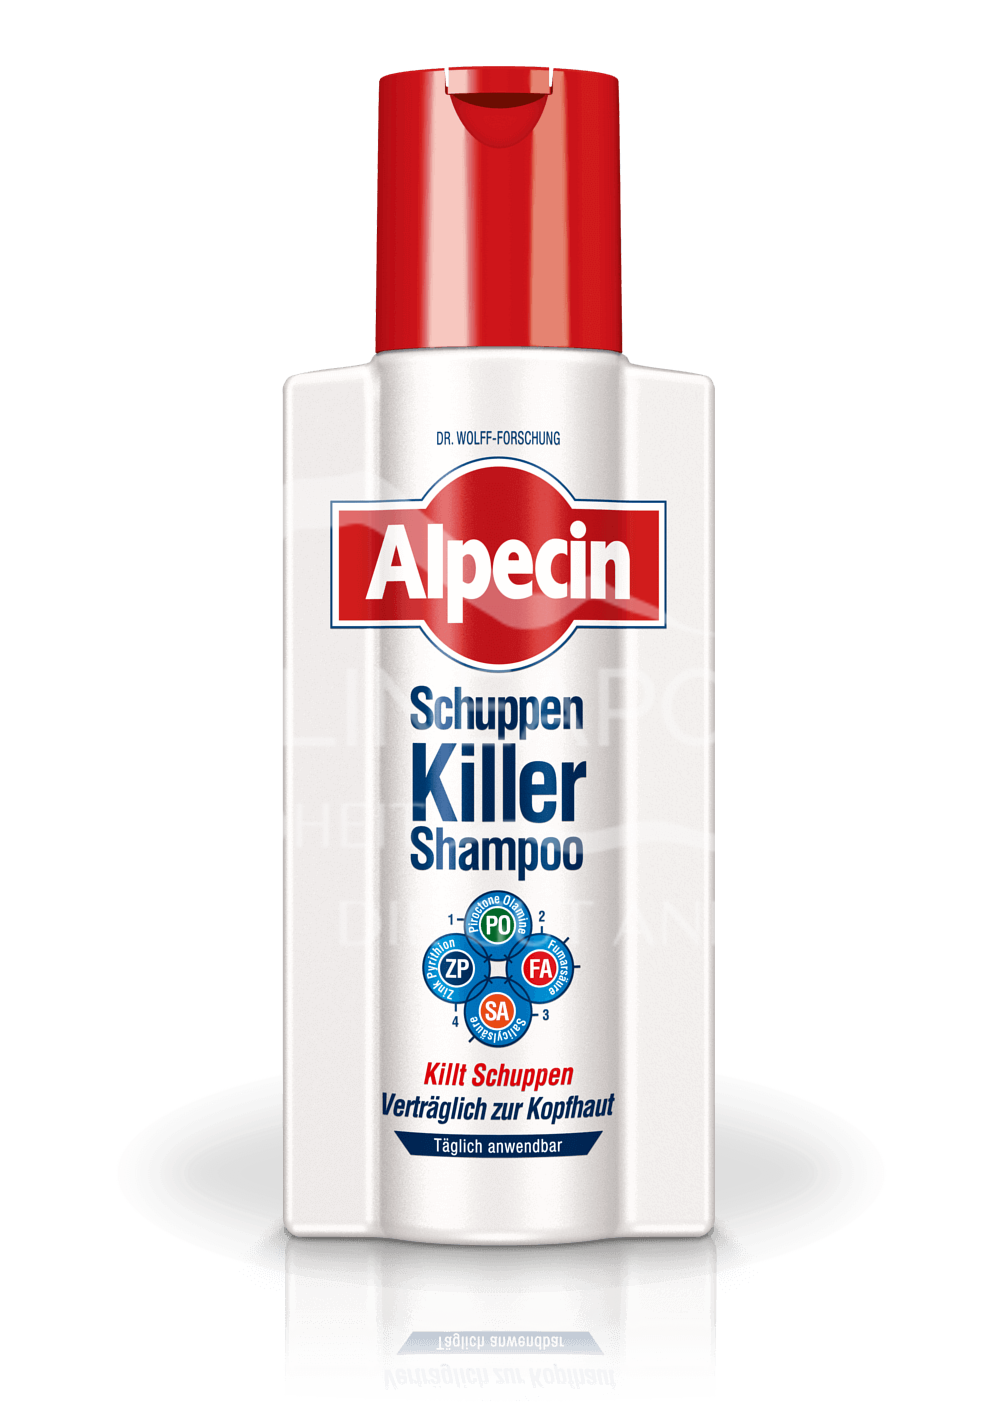 Alpecin Schuppen Killer Shampoo 250ml